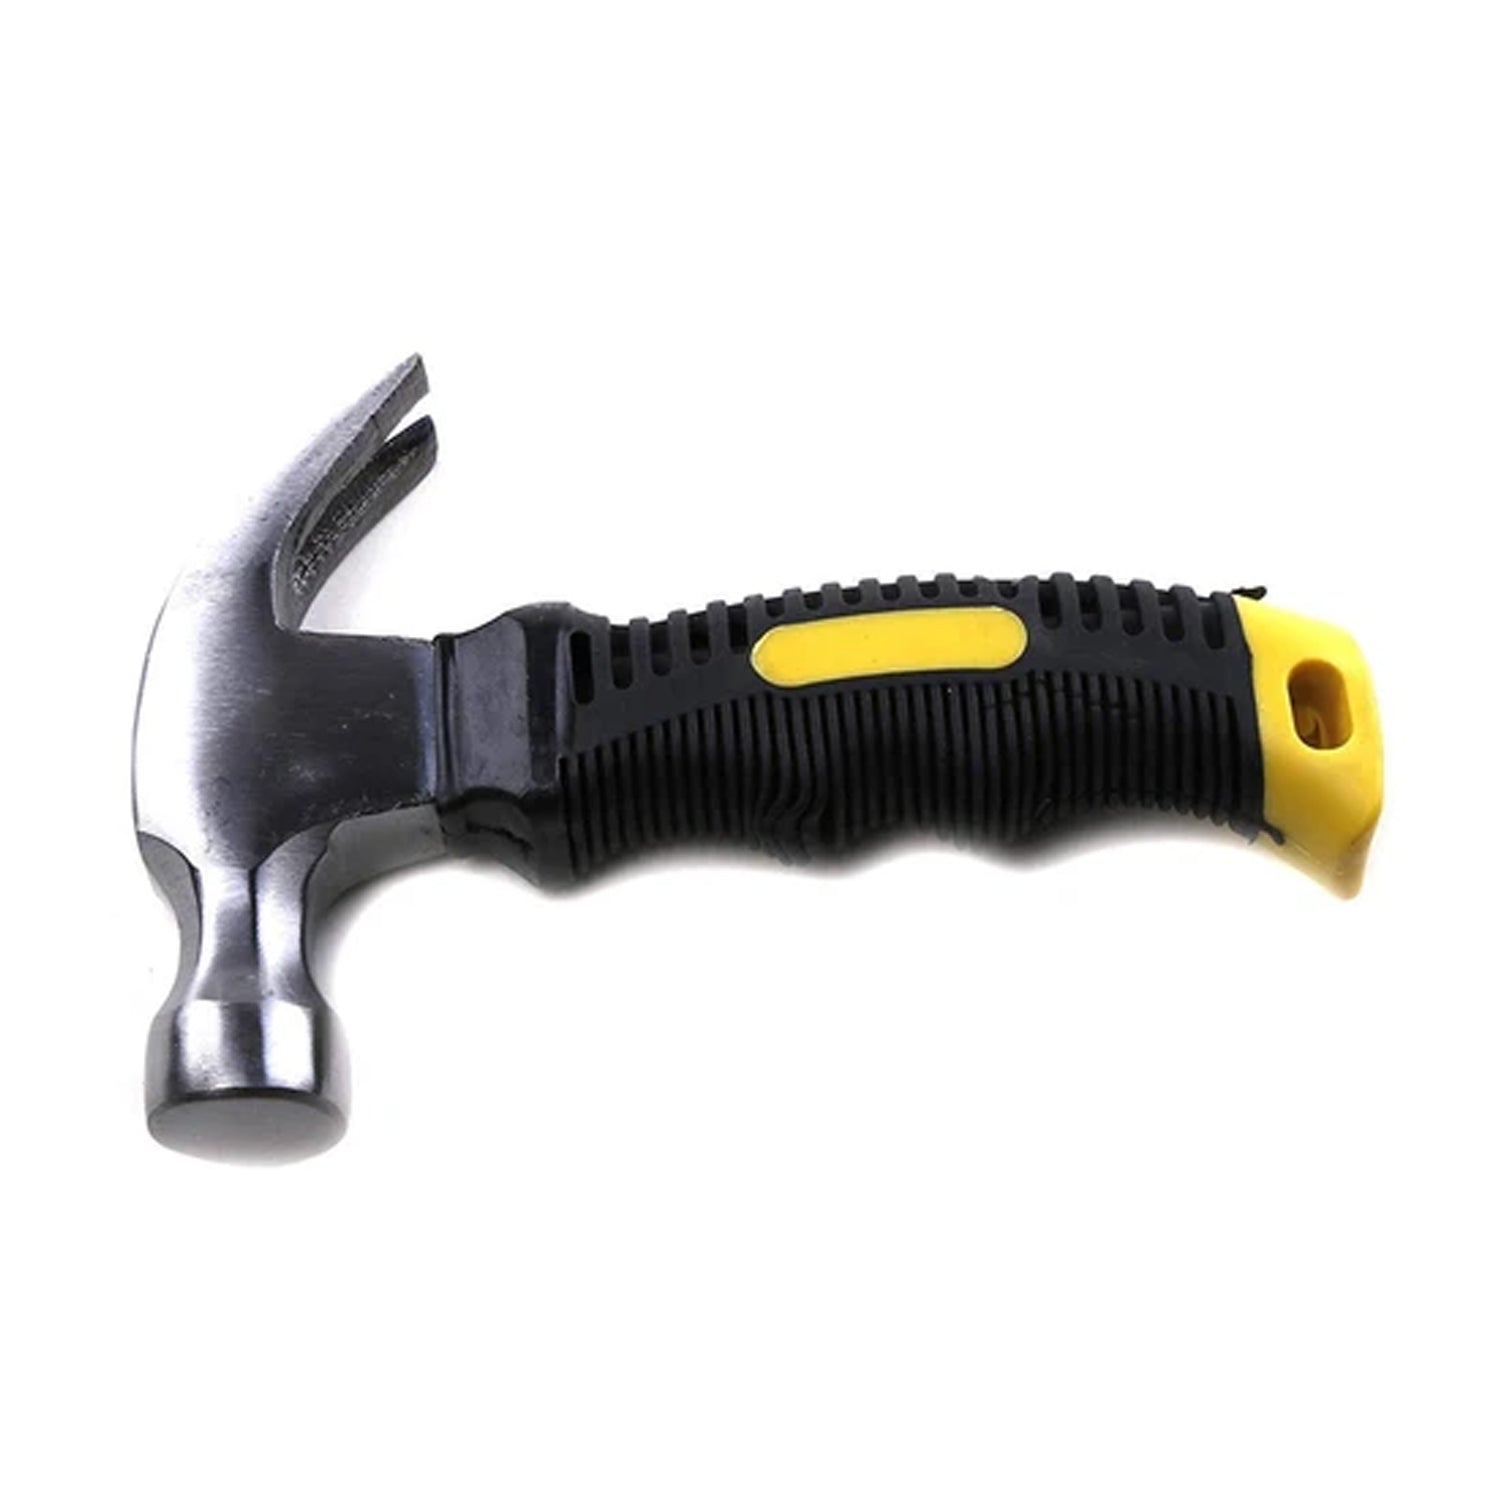 462 Carpenter Mini Claw Hammer JK Trends